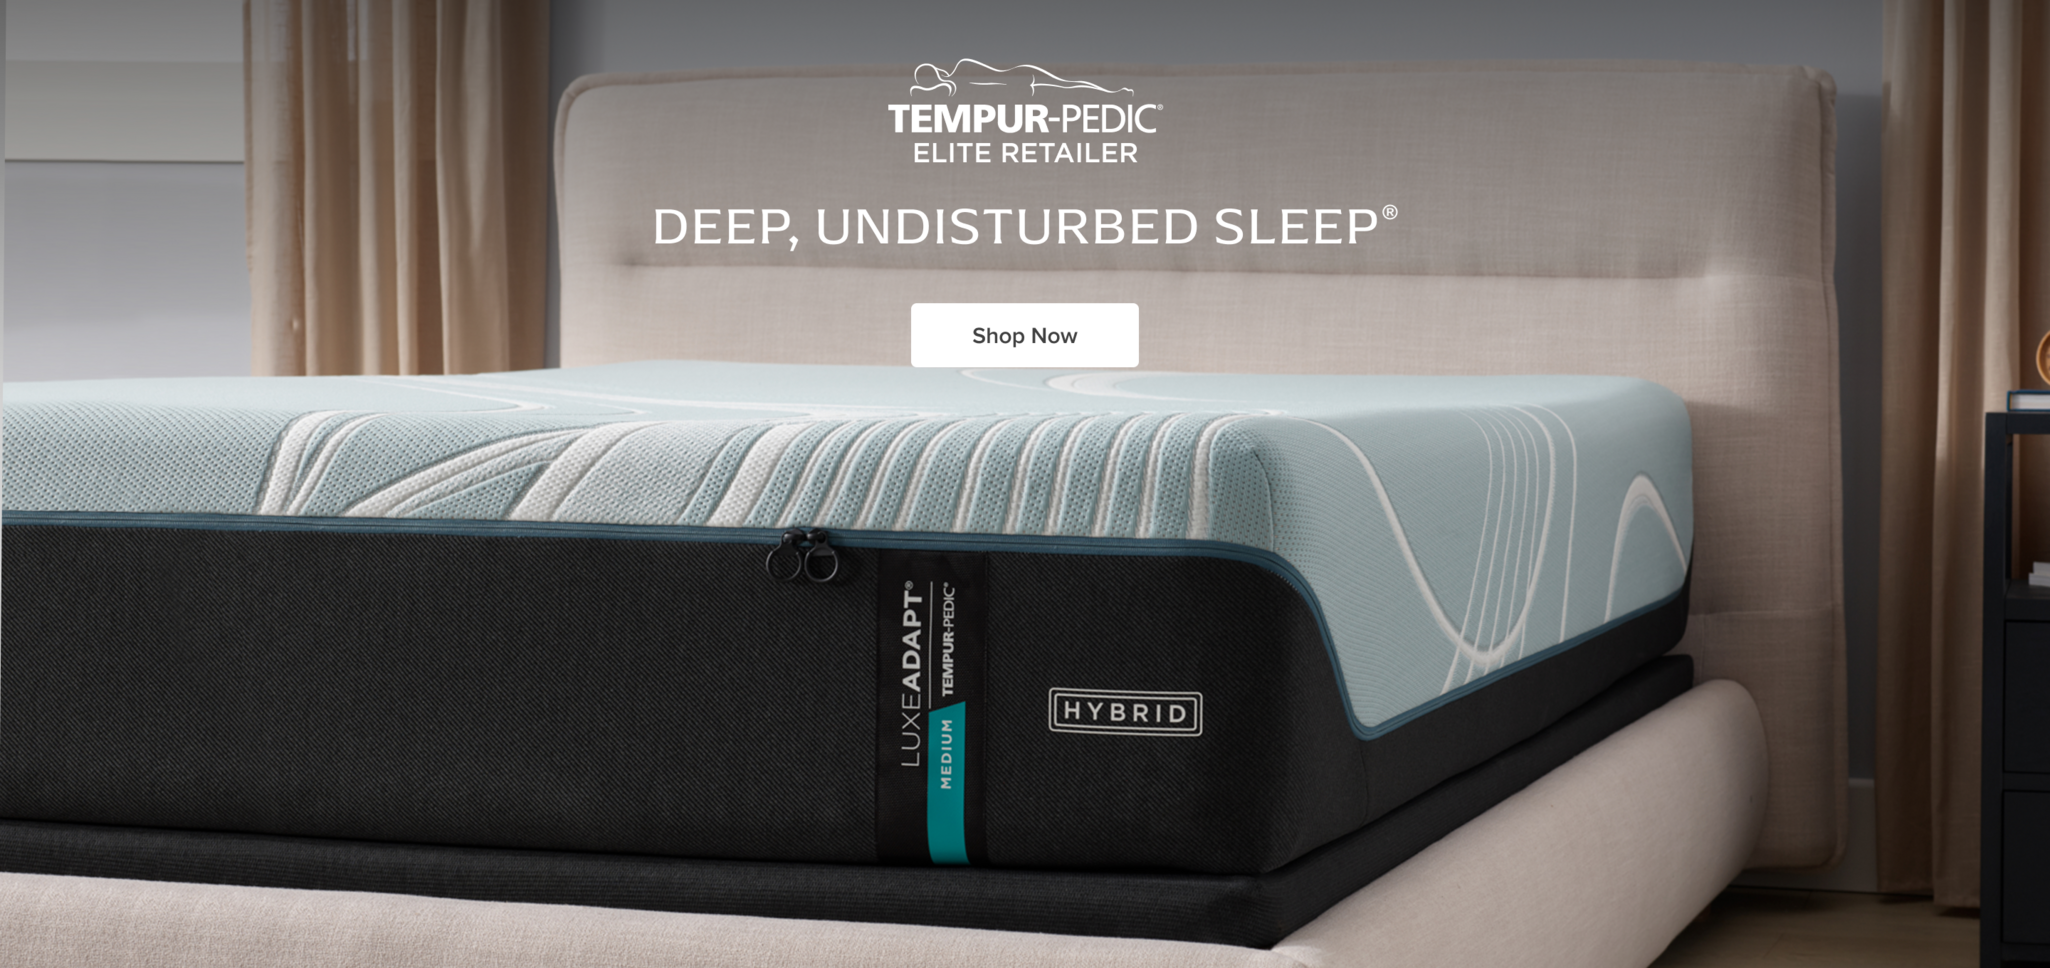 Tempur-Pedic Elite Retailer - Deep, Undisturbed Sleep - Shop Tempur-Pedic